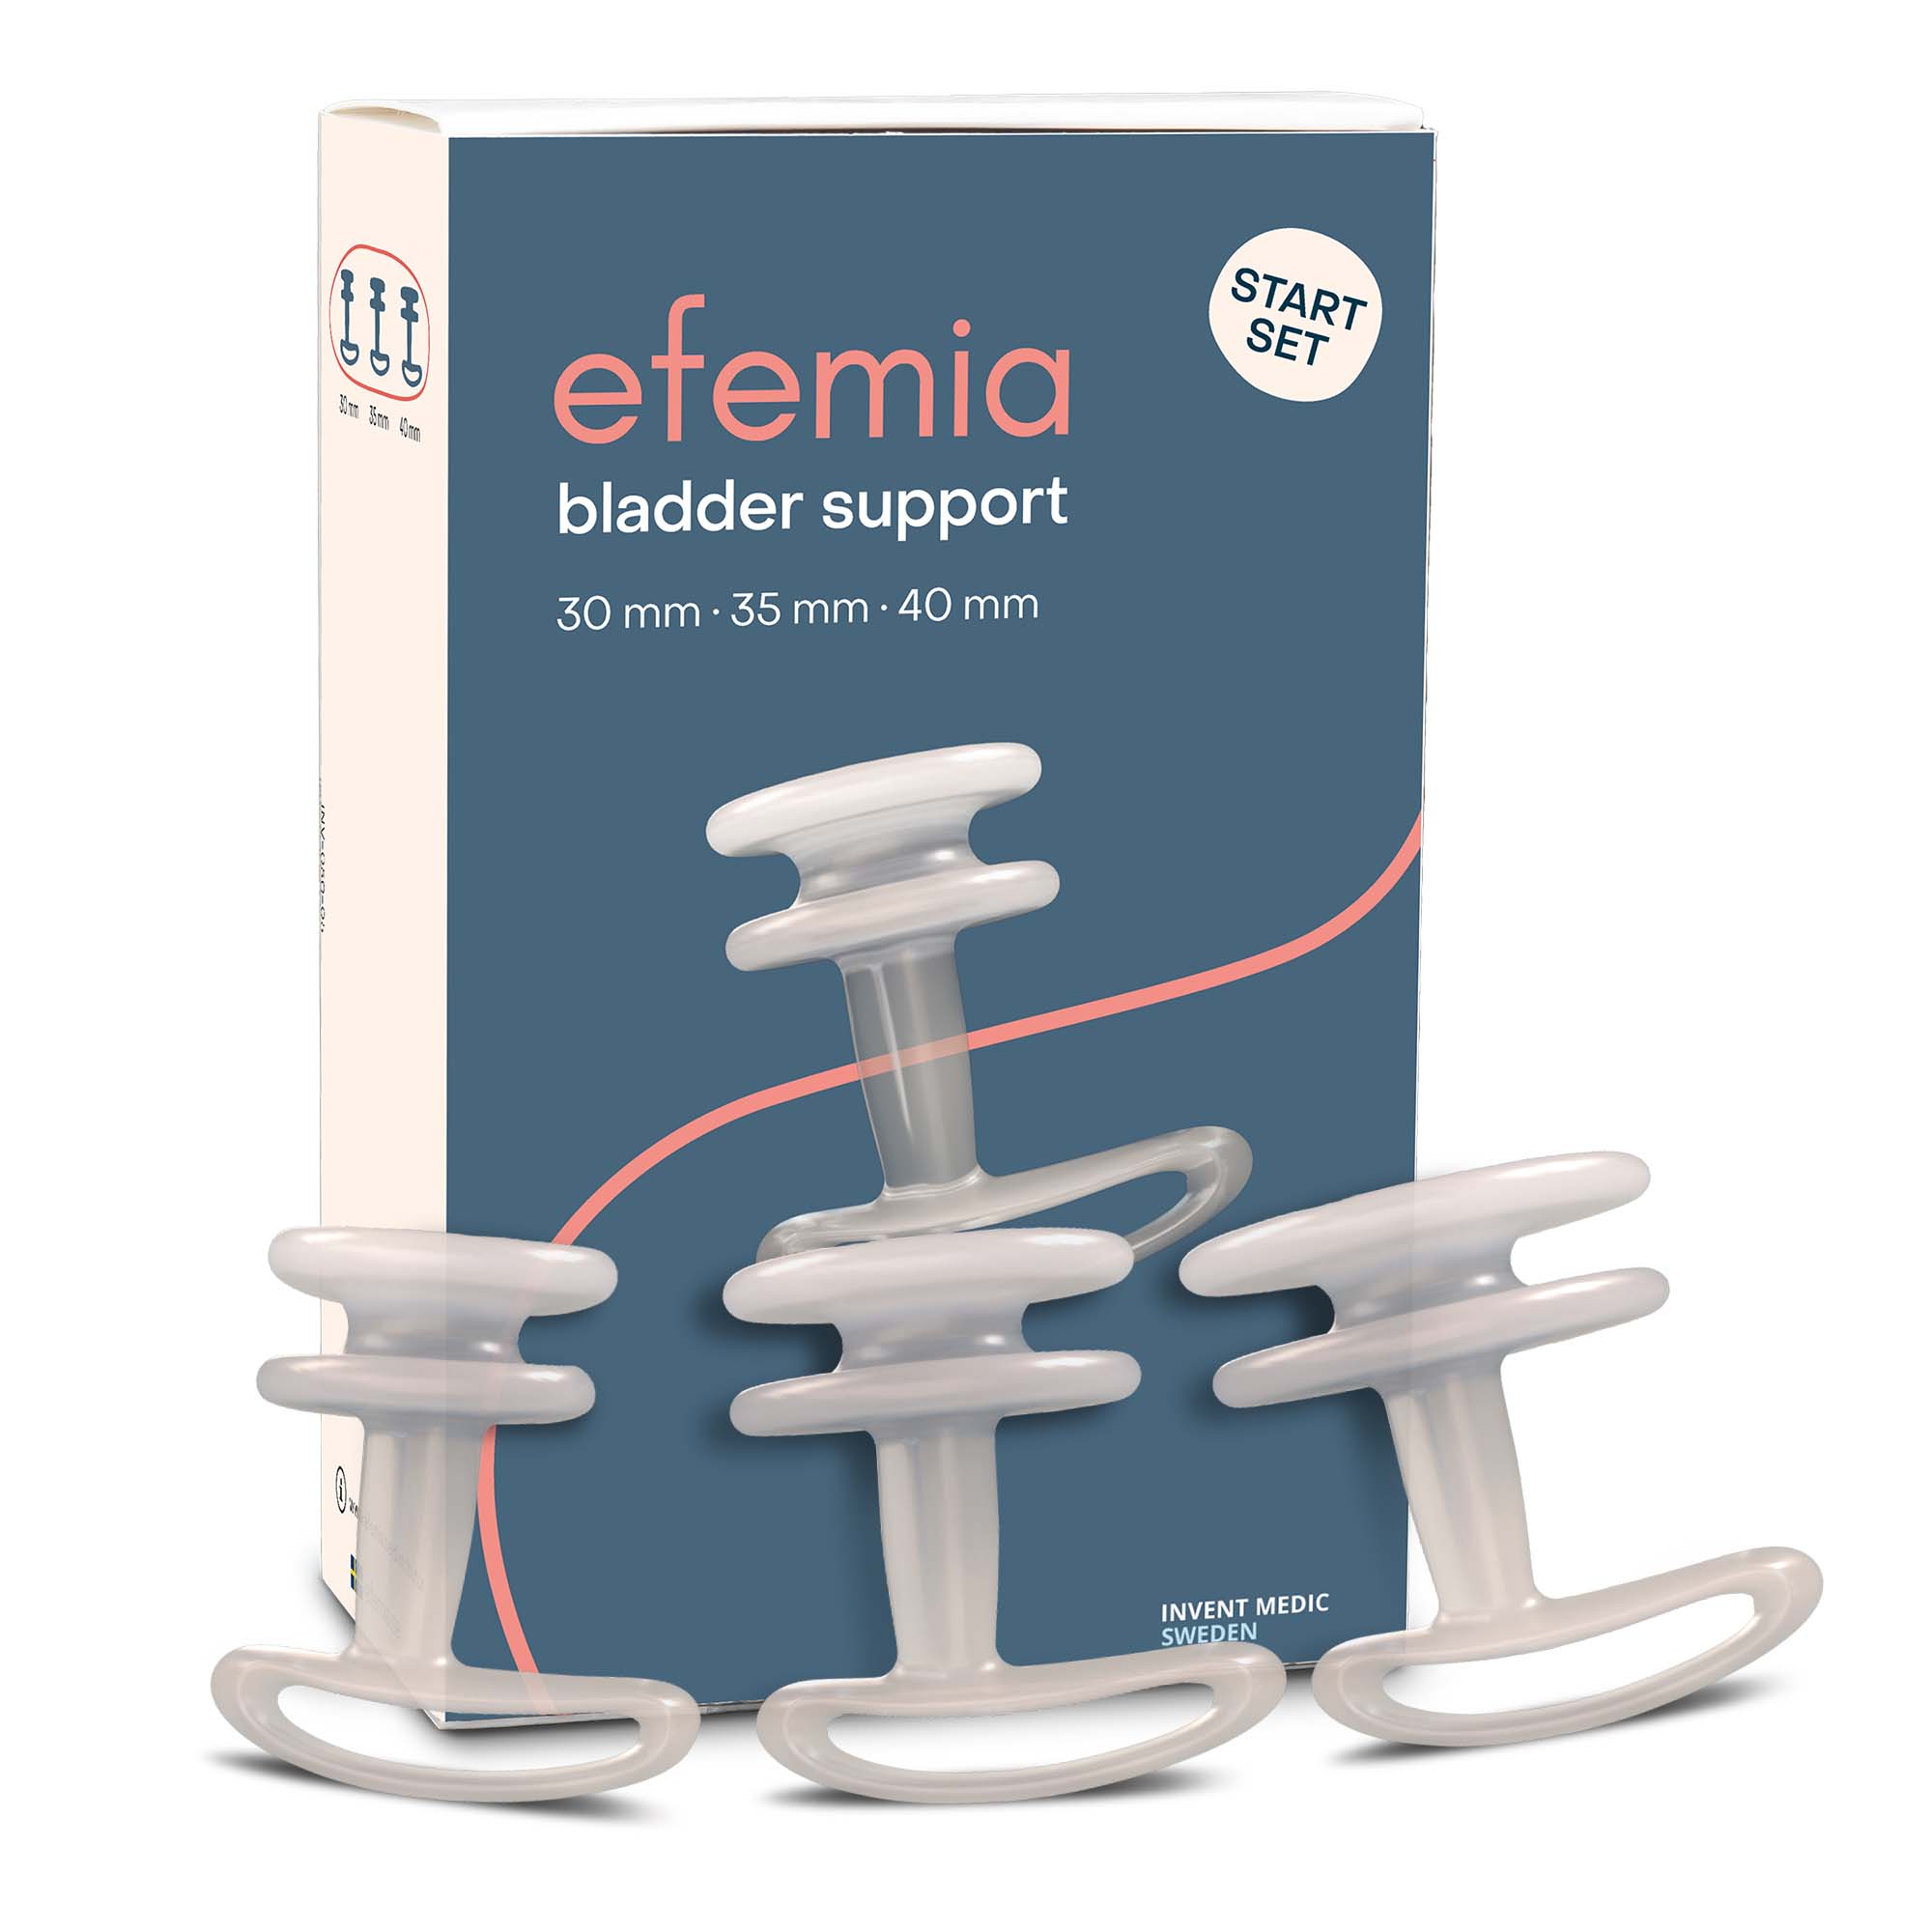 Efemia - packaging Start Set avec efemia - face - carré - 2000x2000.jpg